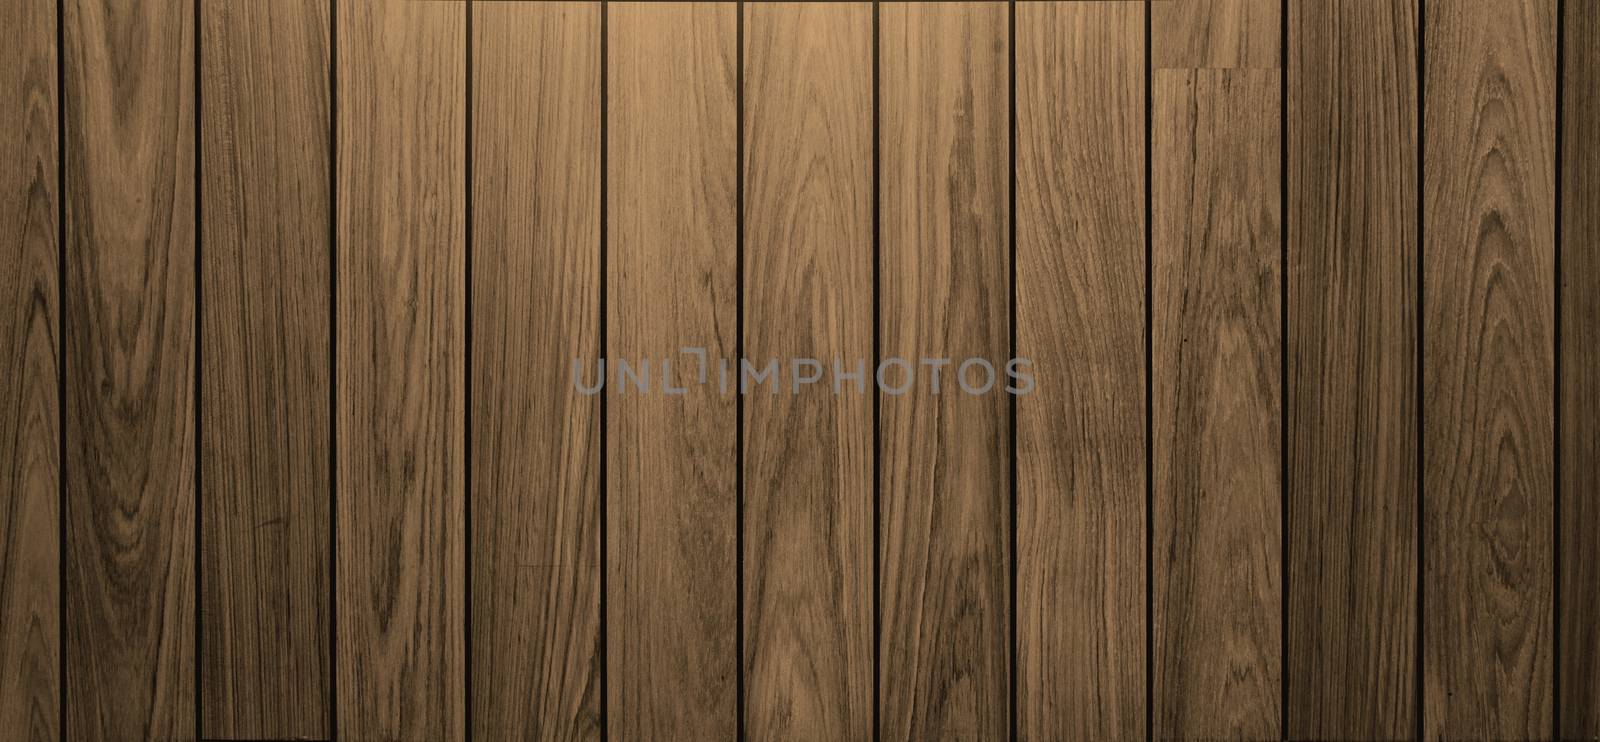 vintage wooden texture background